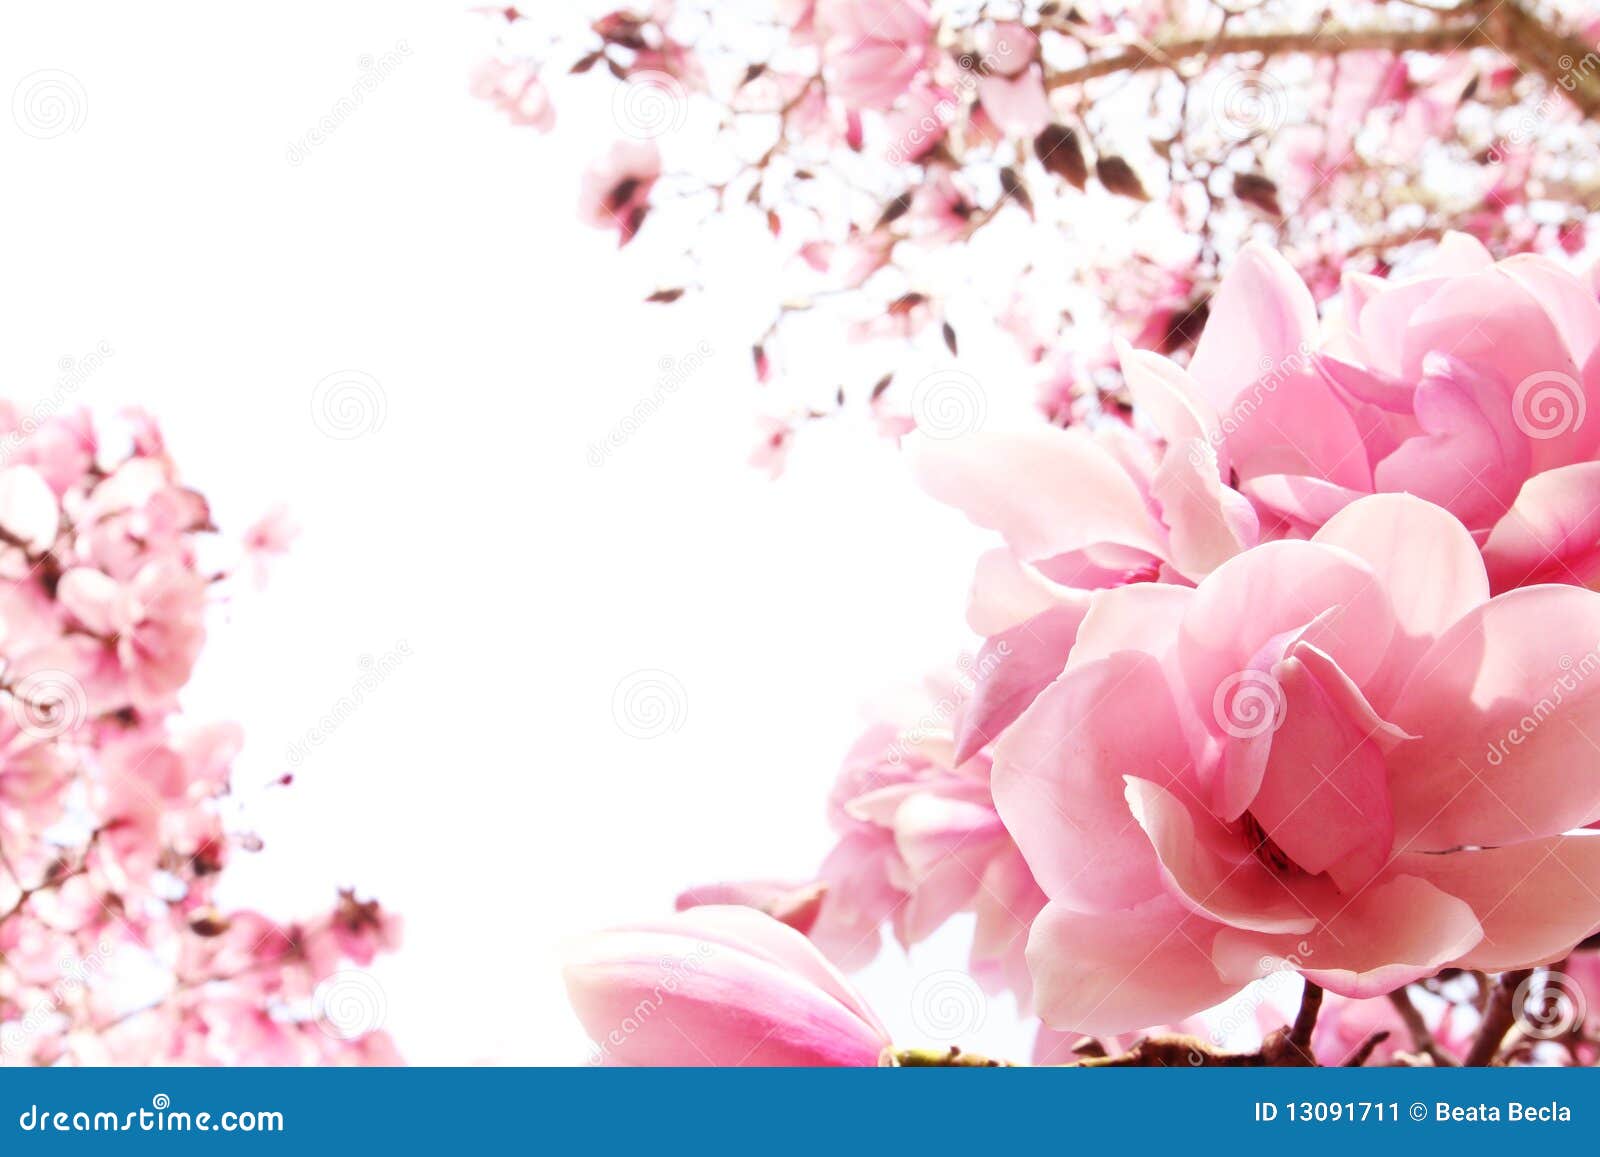 spring magnolia tree in bloom